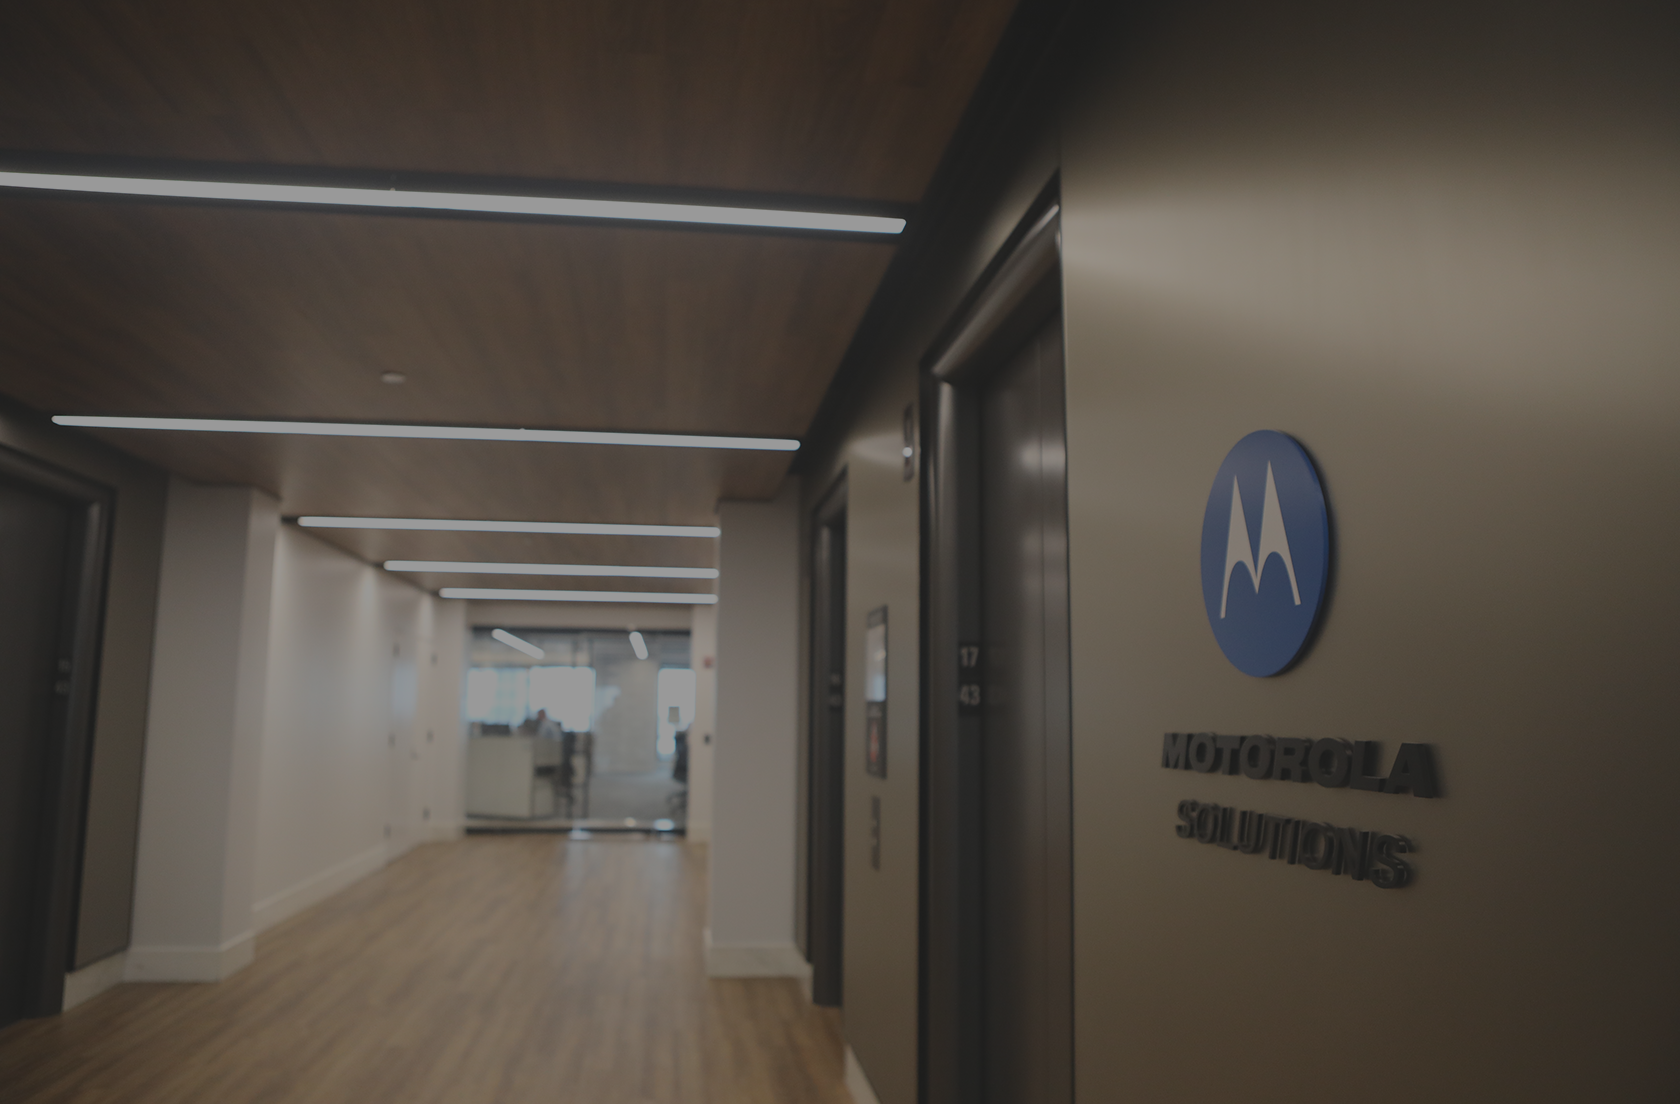 Motorola Solutions facility hallway